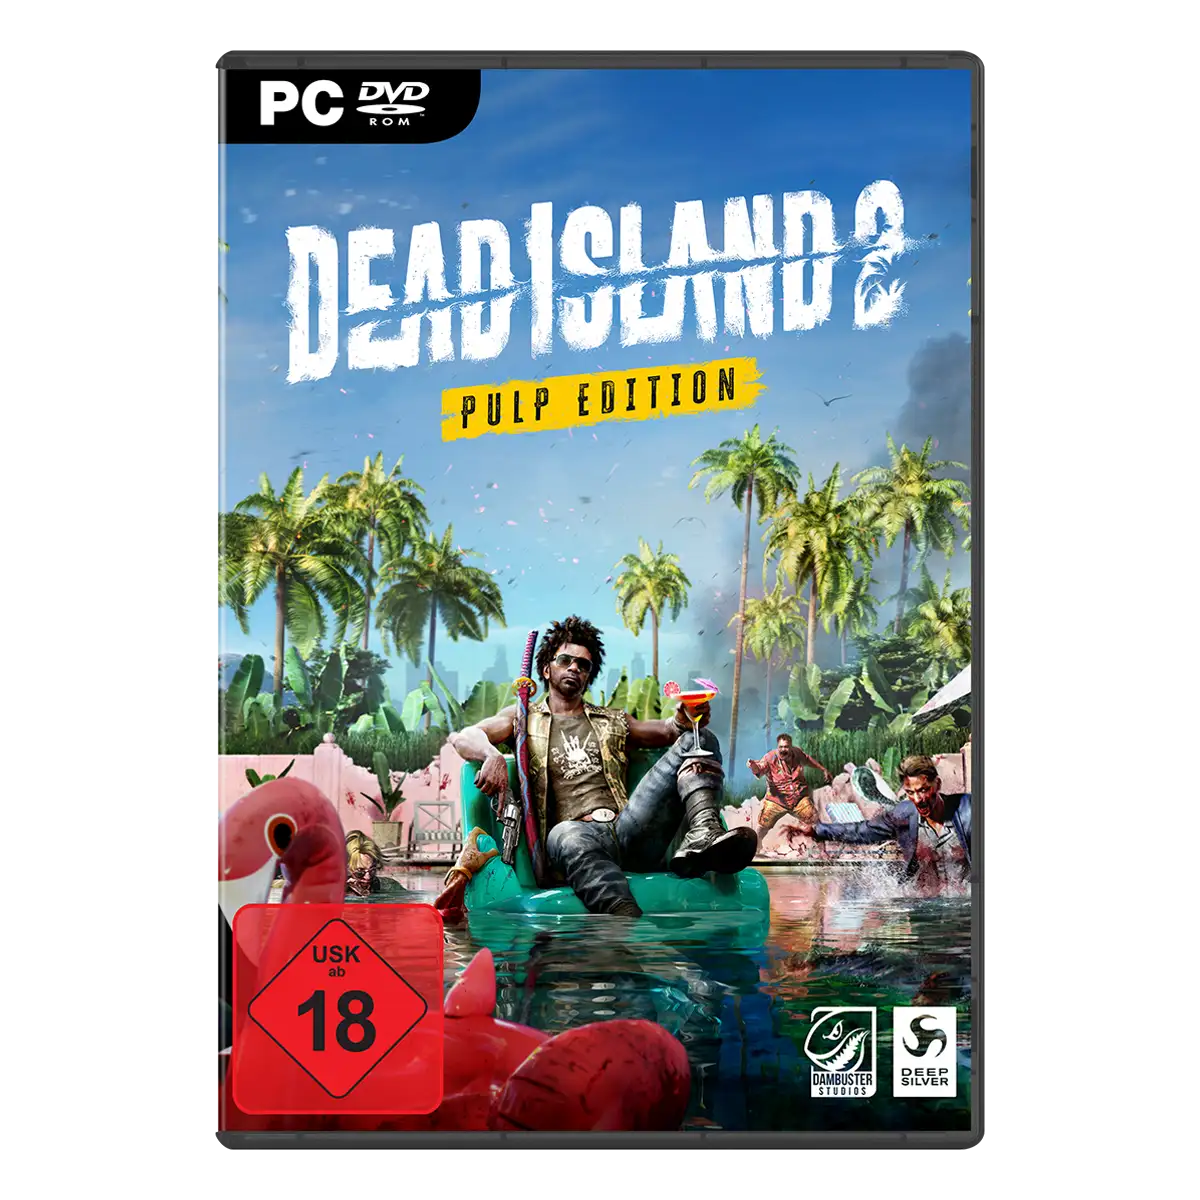 Dead Island 2 PULP Edition (PC) (USK) Thumbnail 1